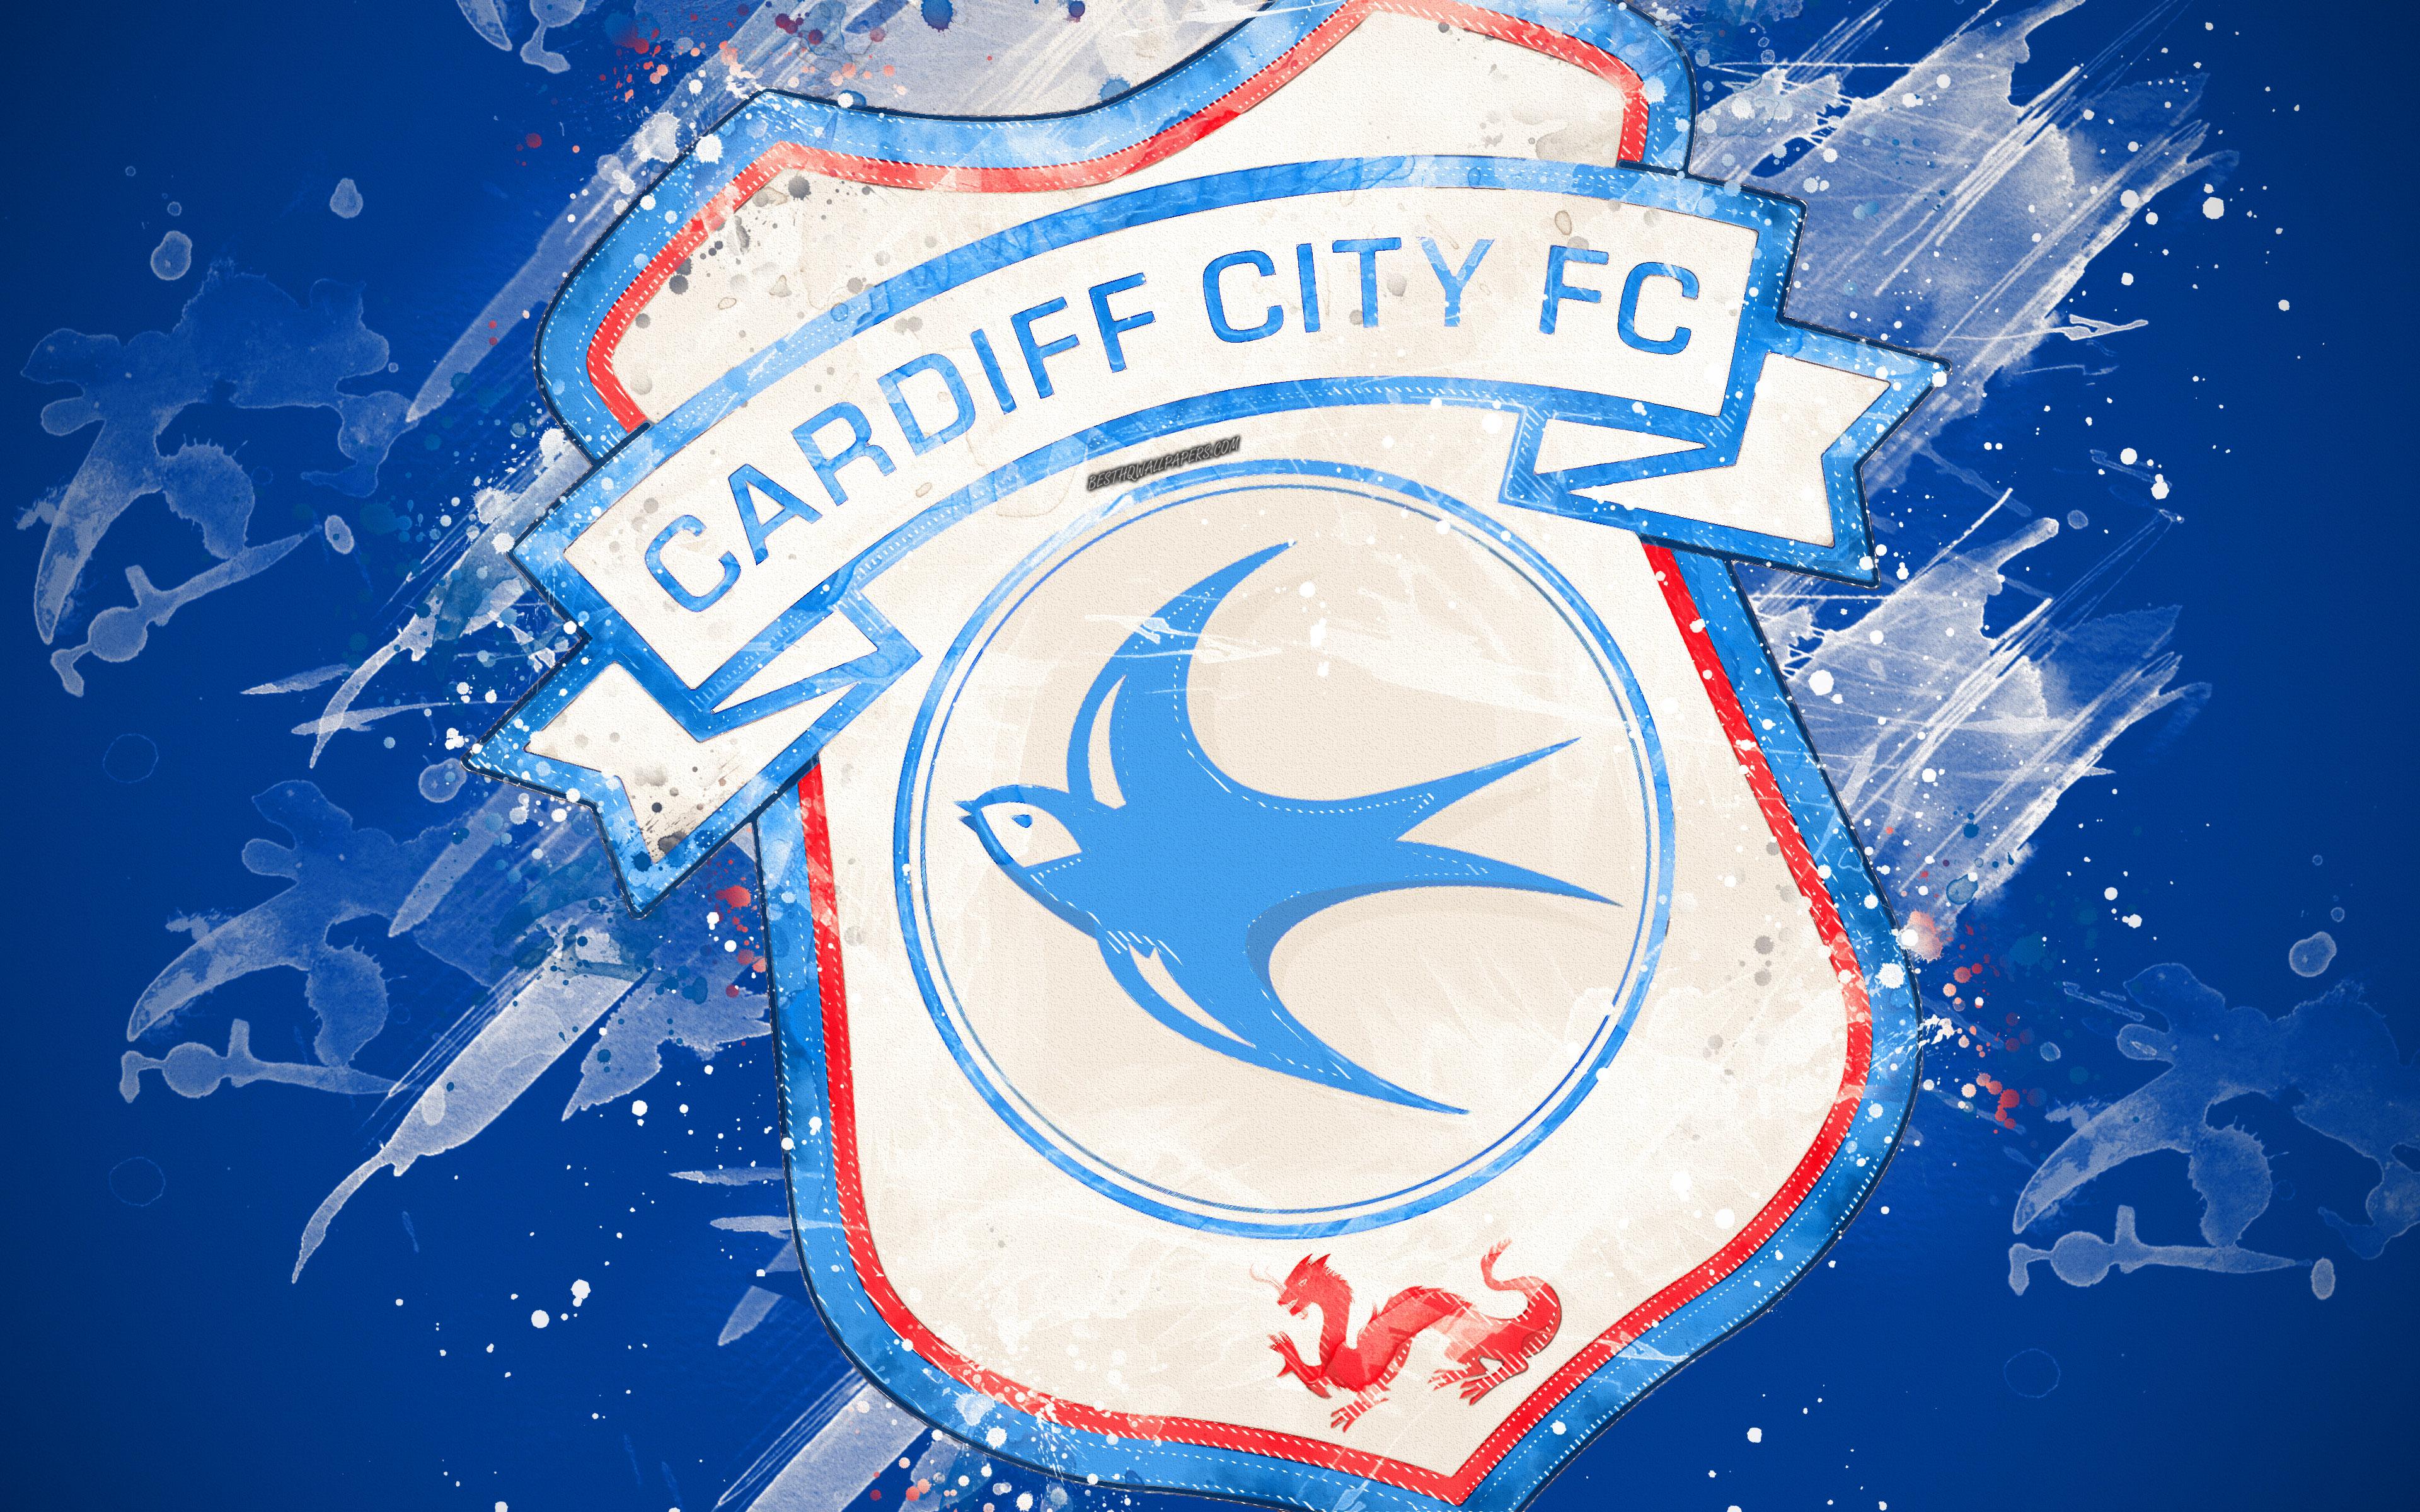 Download wallpaper Cardiff City FC, 4k, paint art, logo, creative